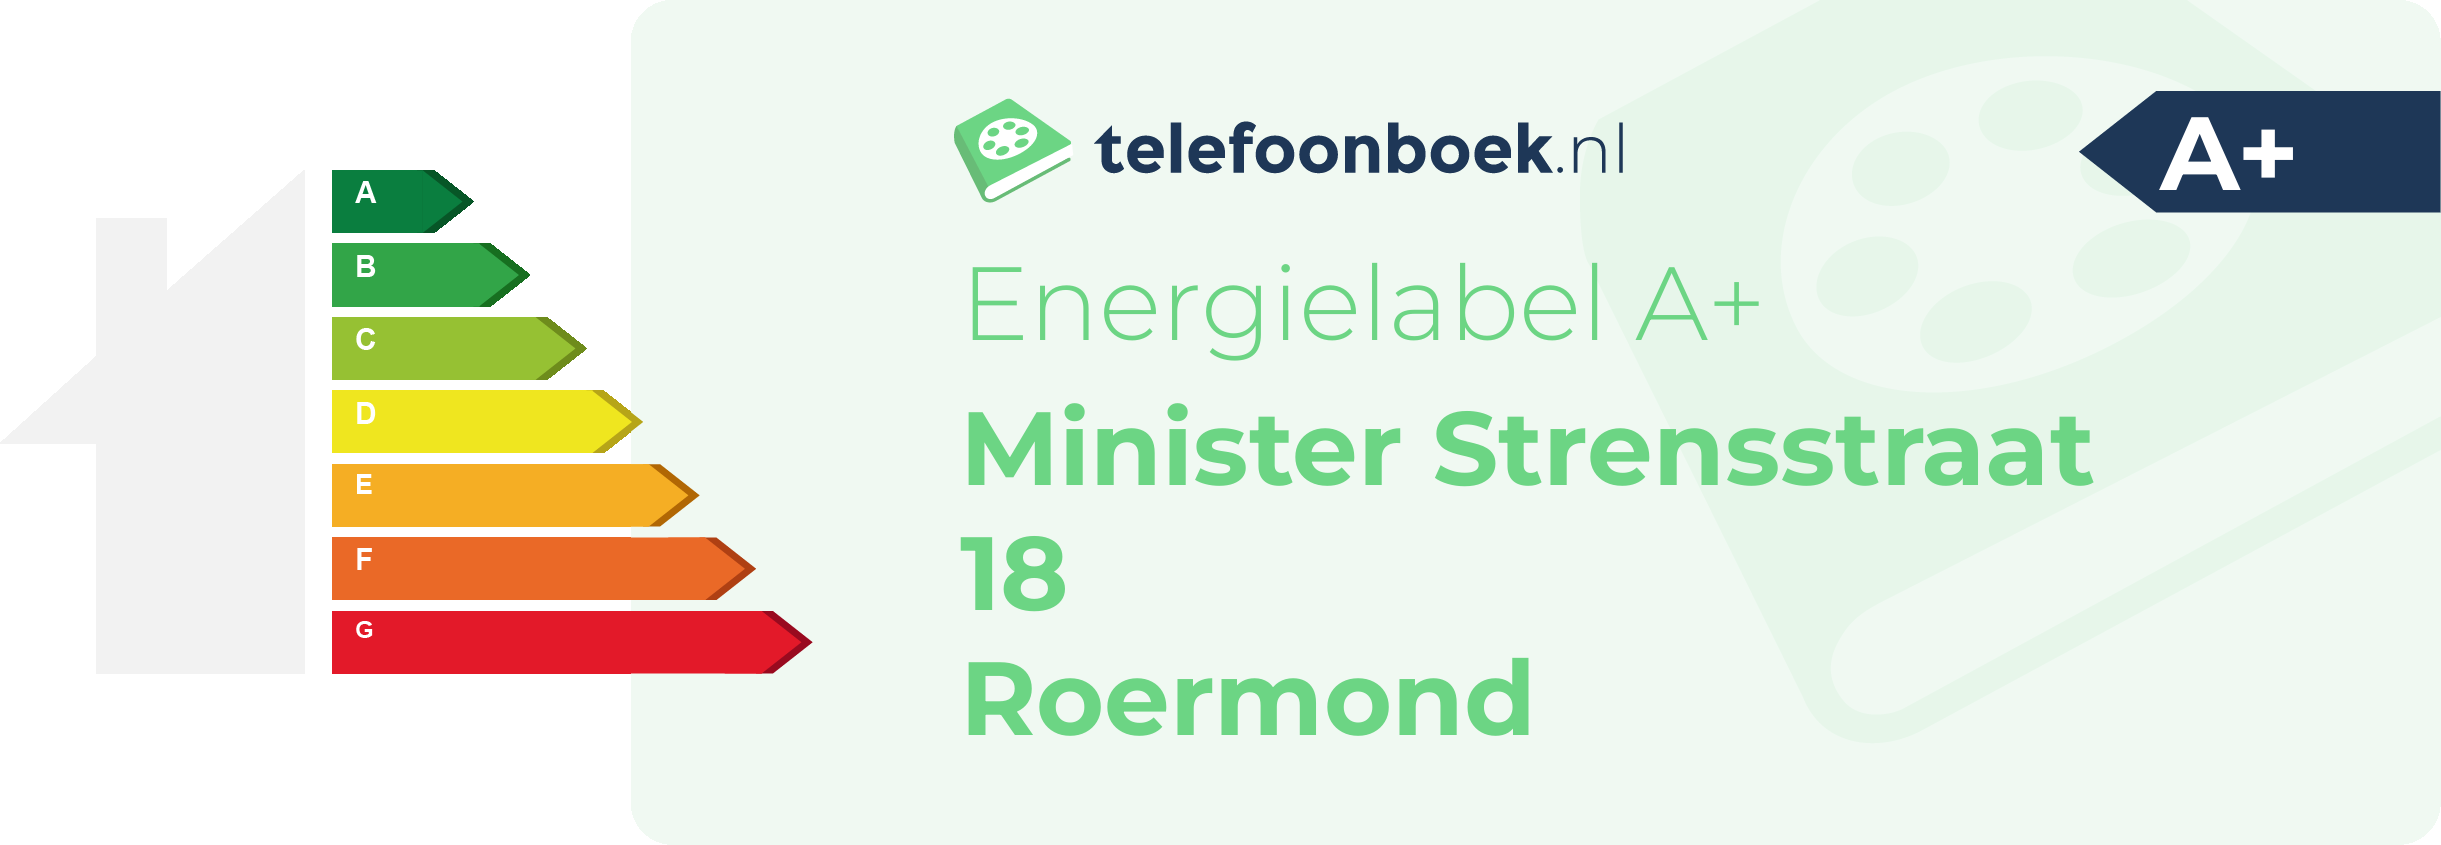 Energielabel Minister Strensstraat 18 Roermond